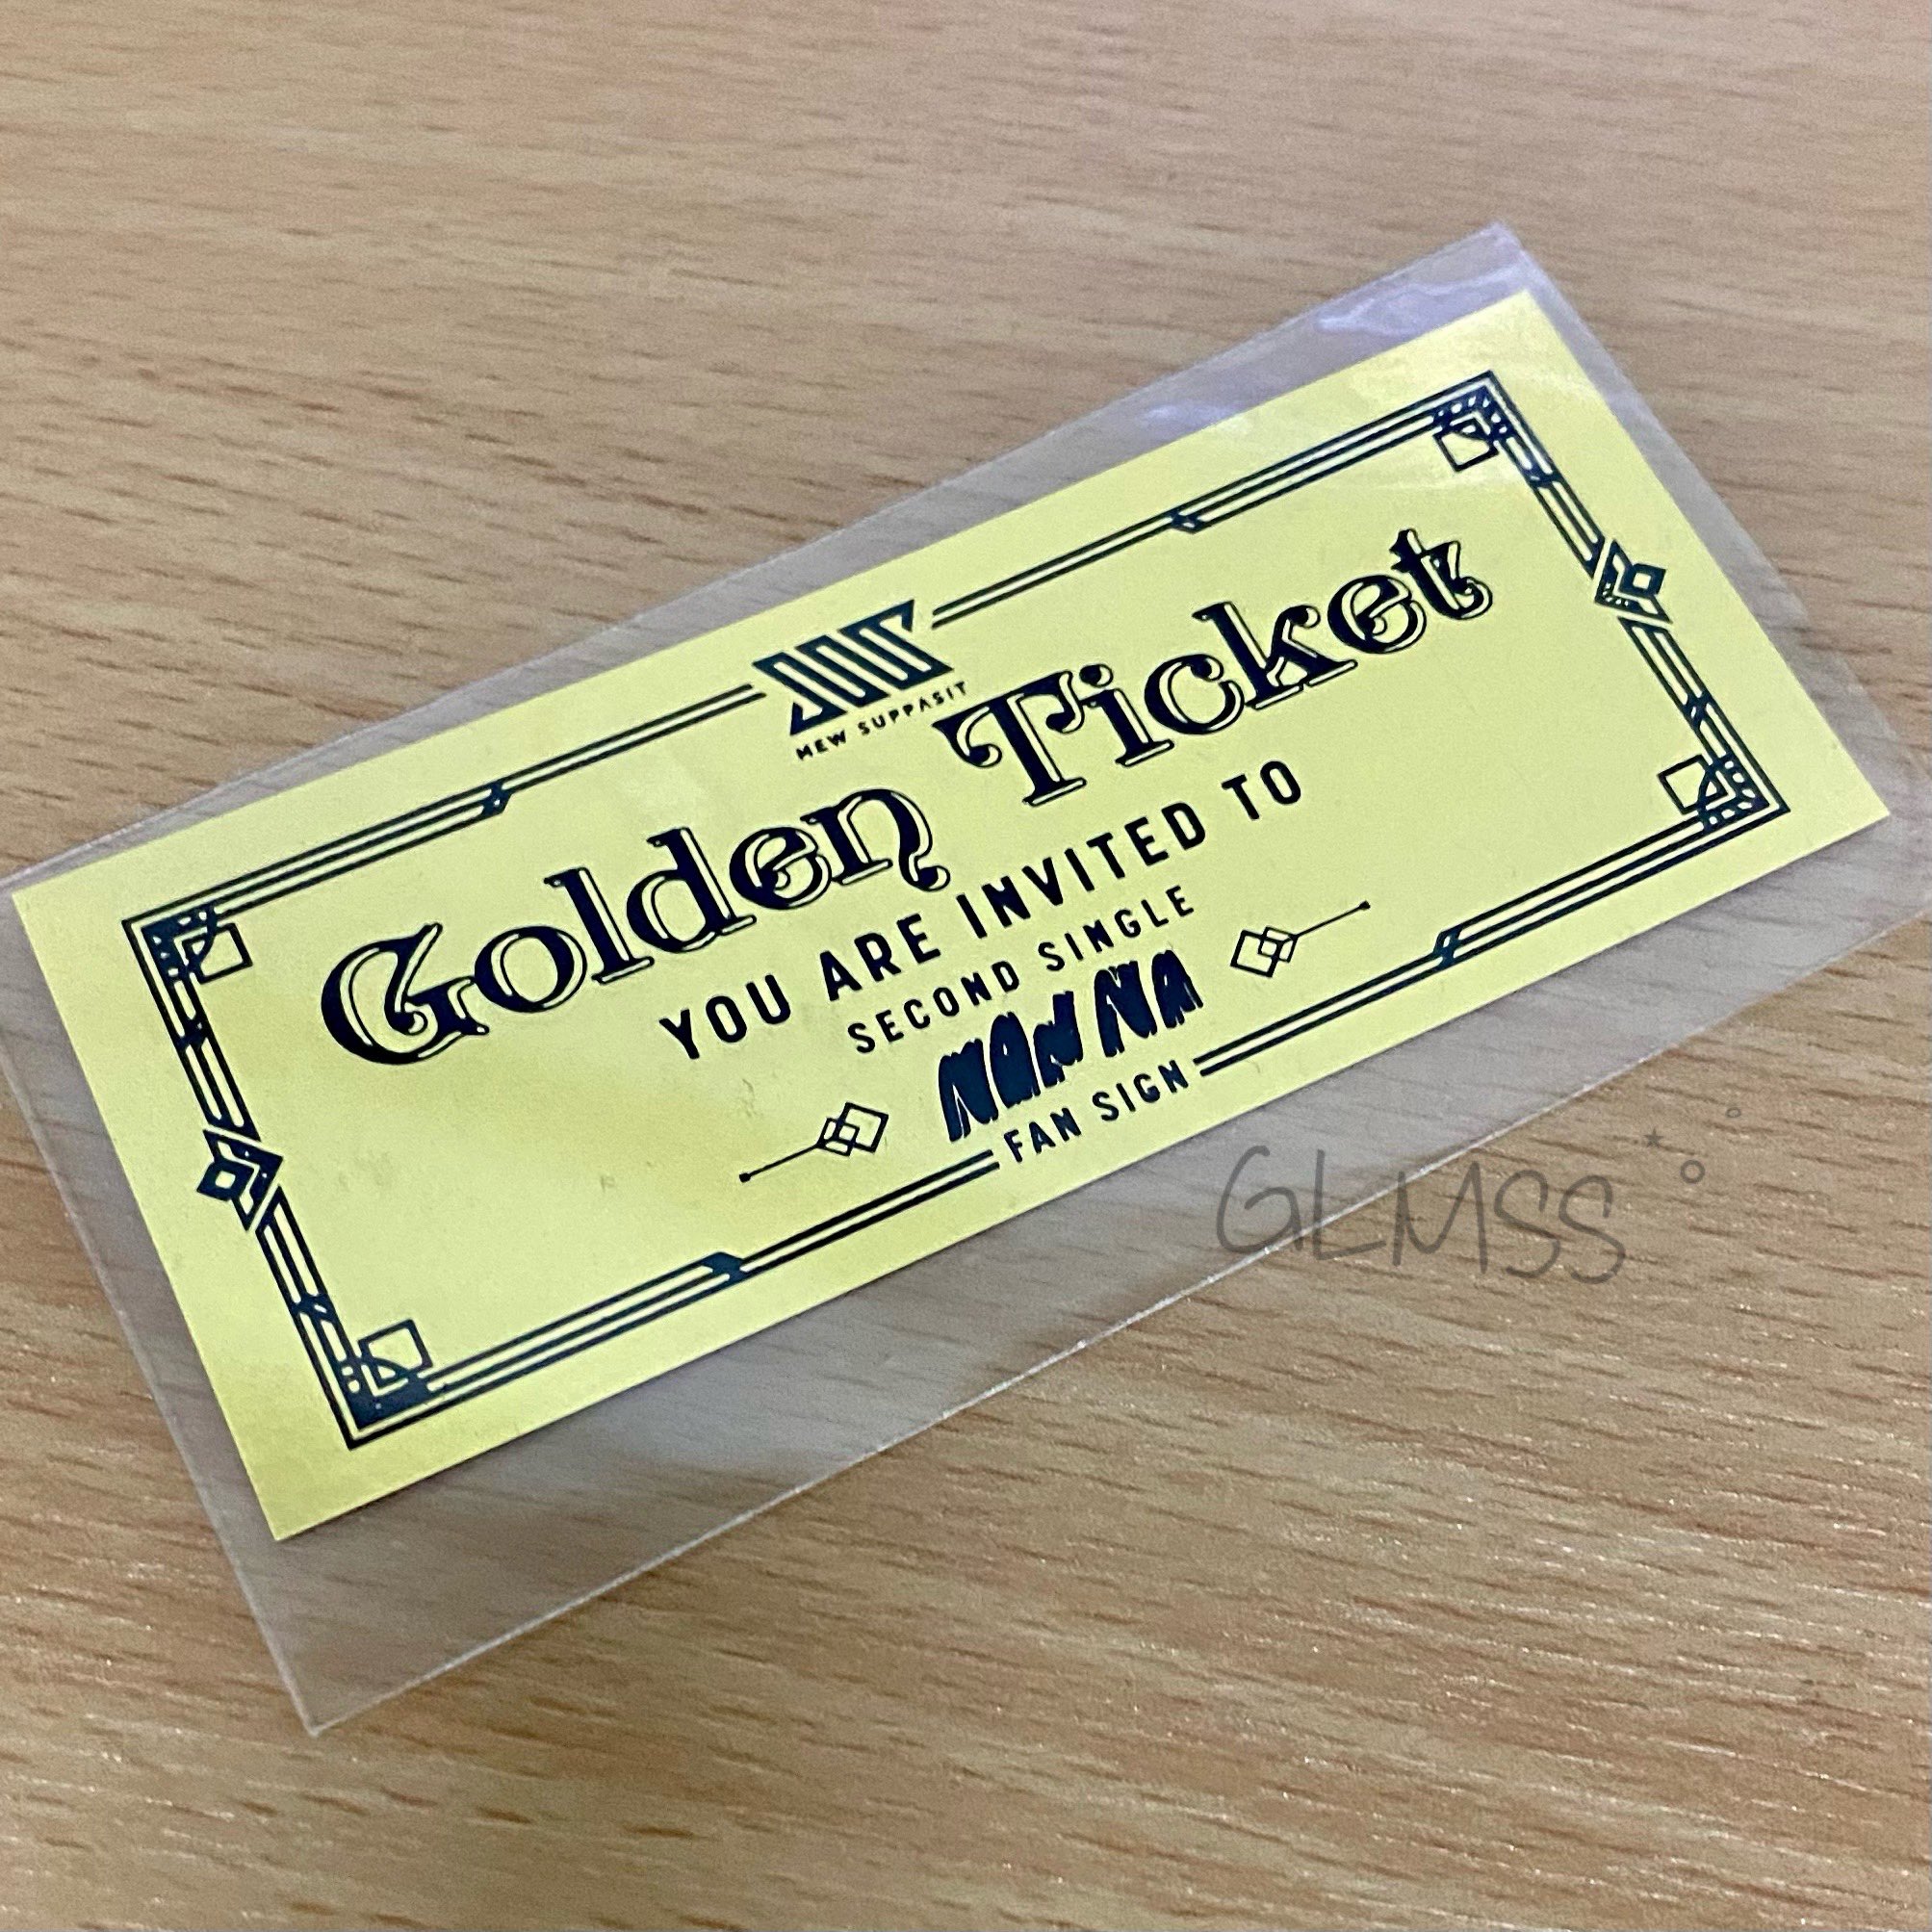 mew suppasit golden ticket とbefore 430